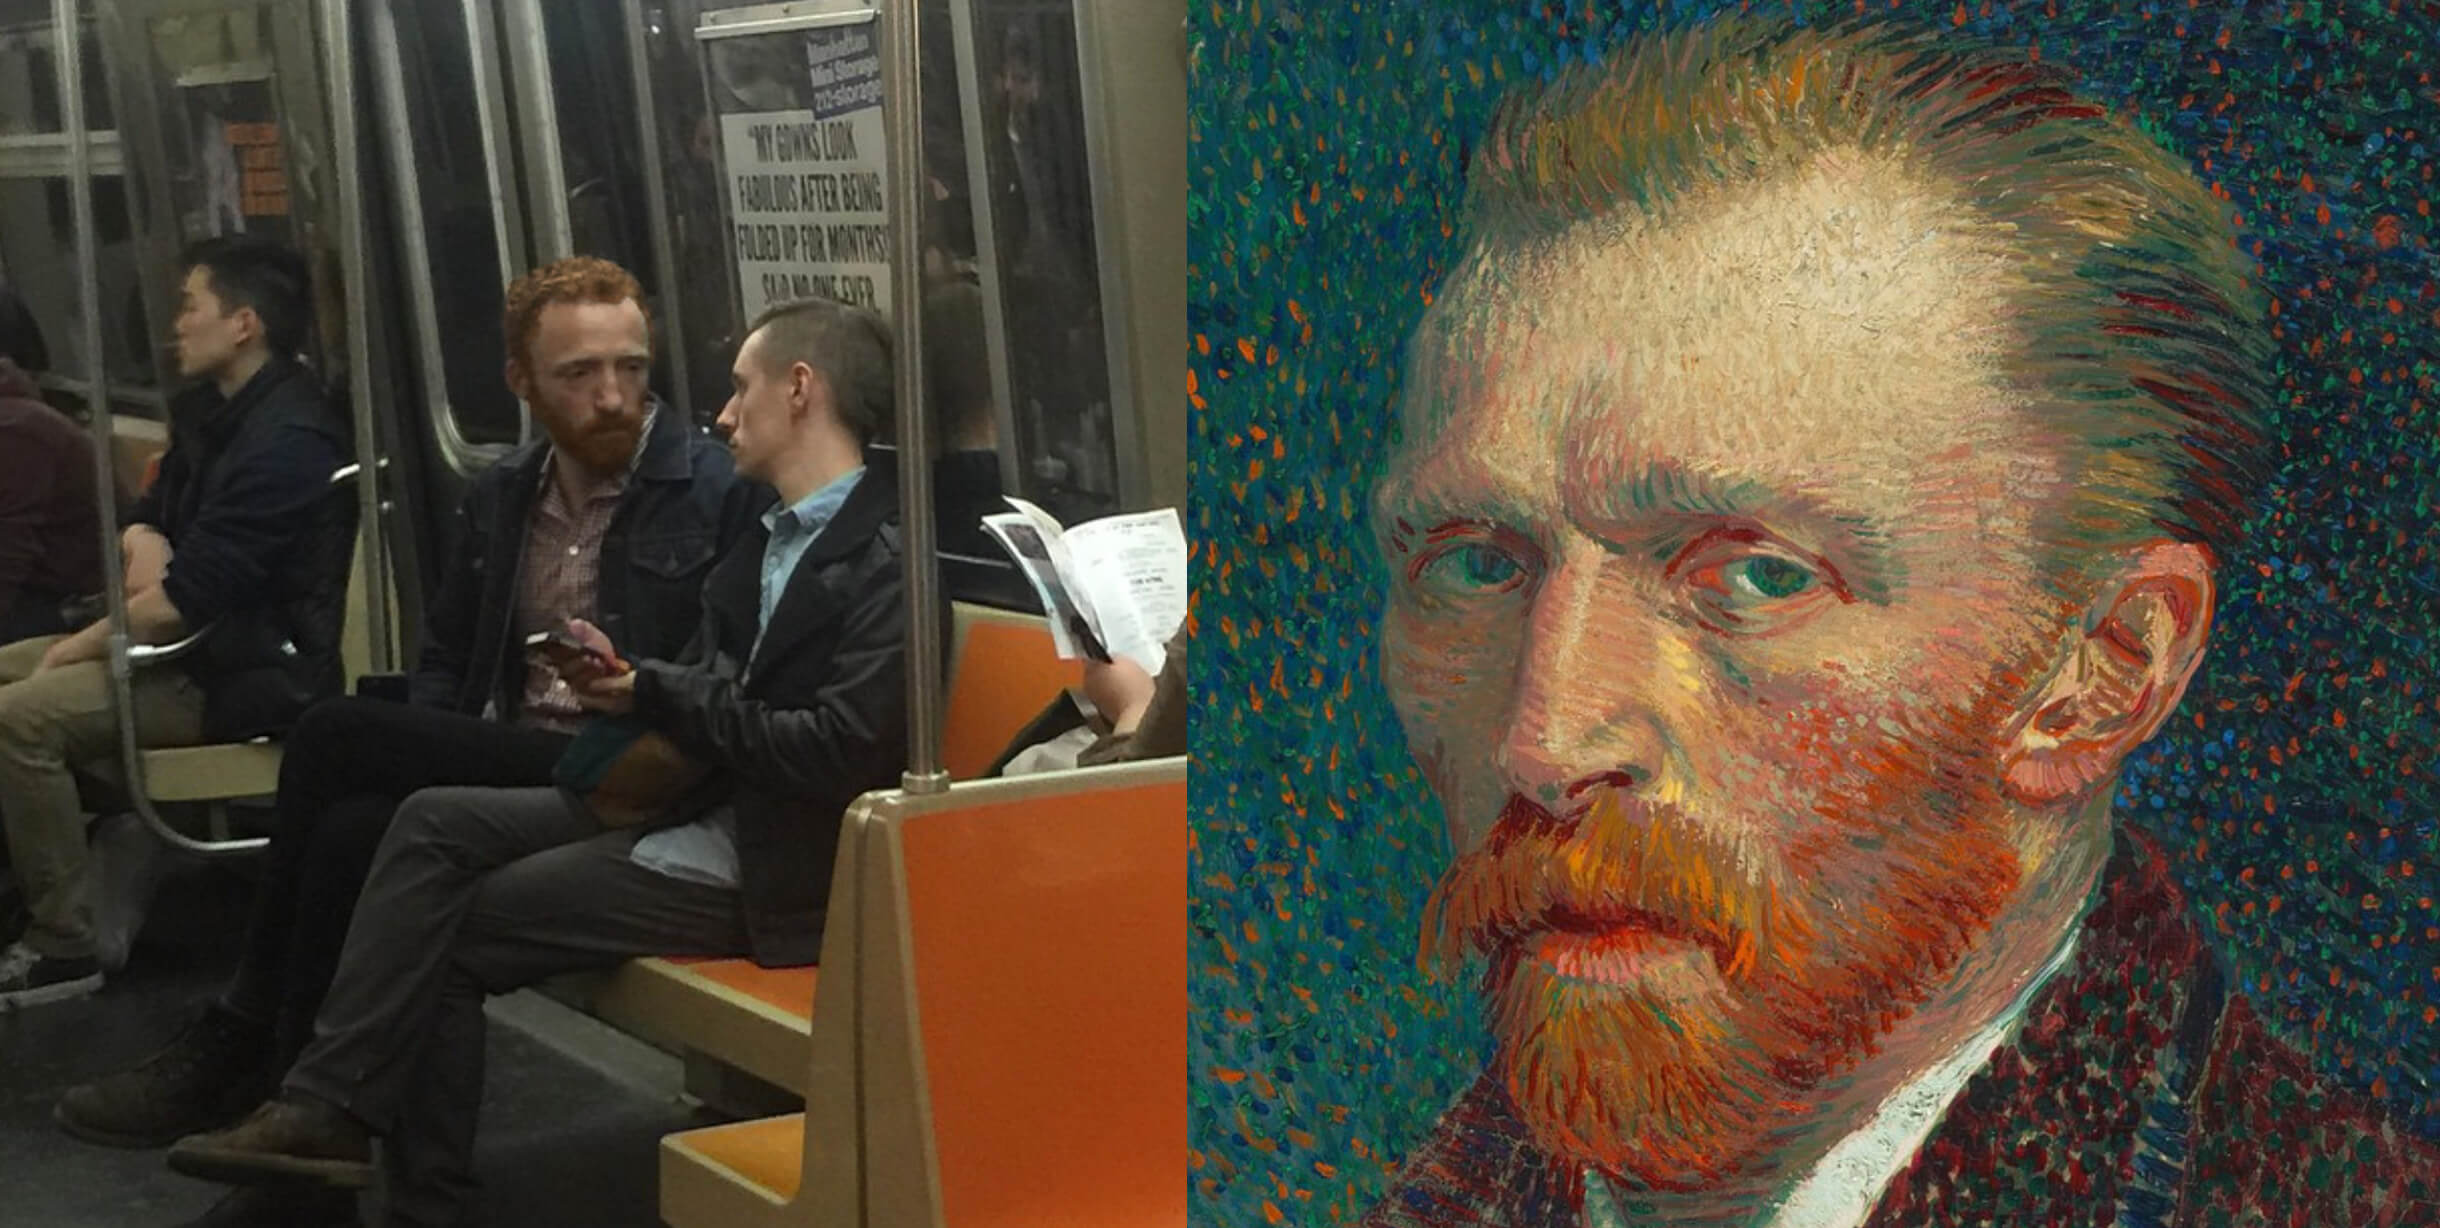 Vincent van Gogh doppelganger, via Reddit 